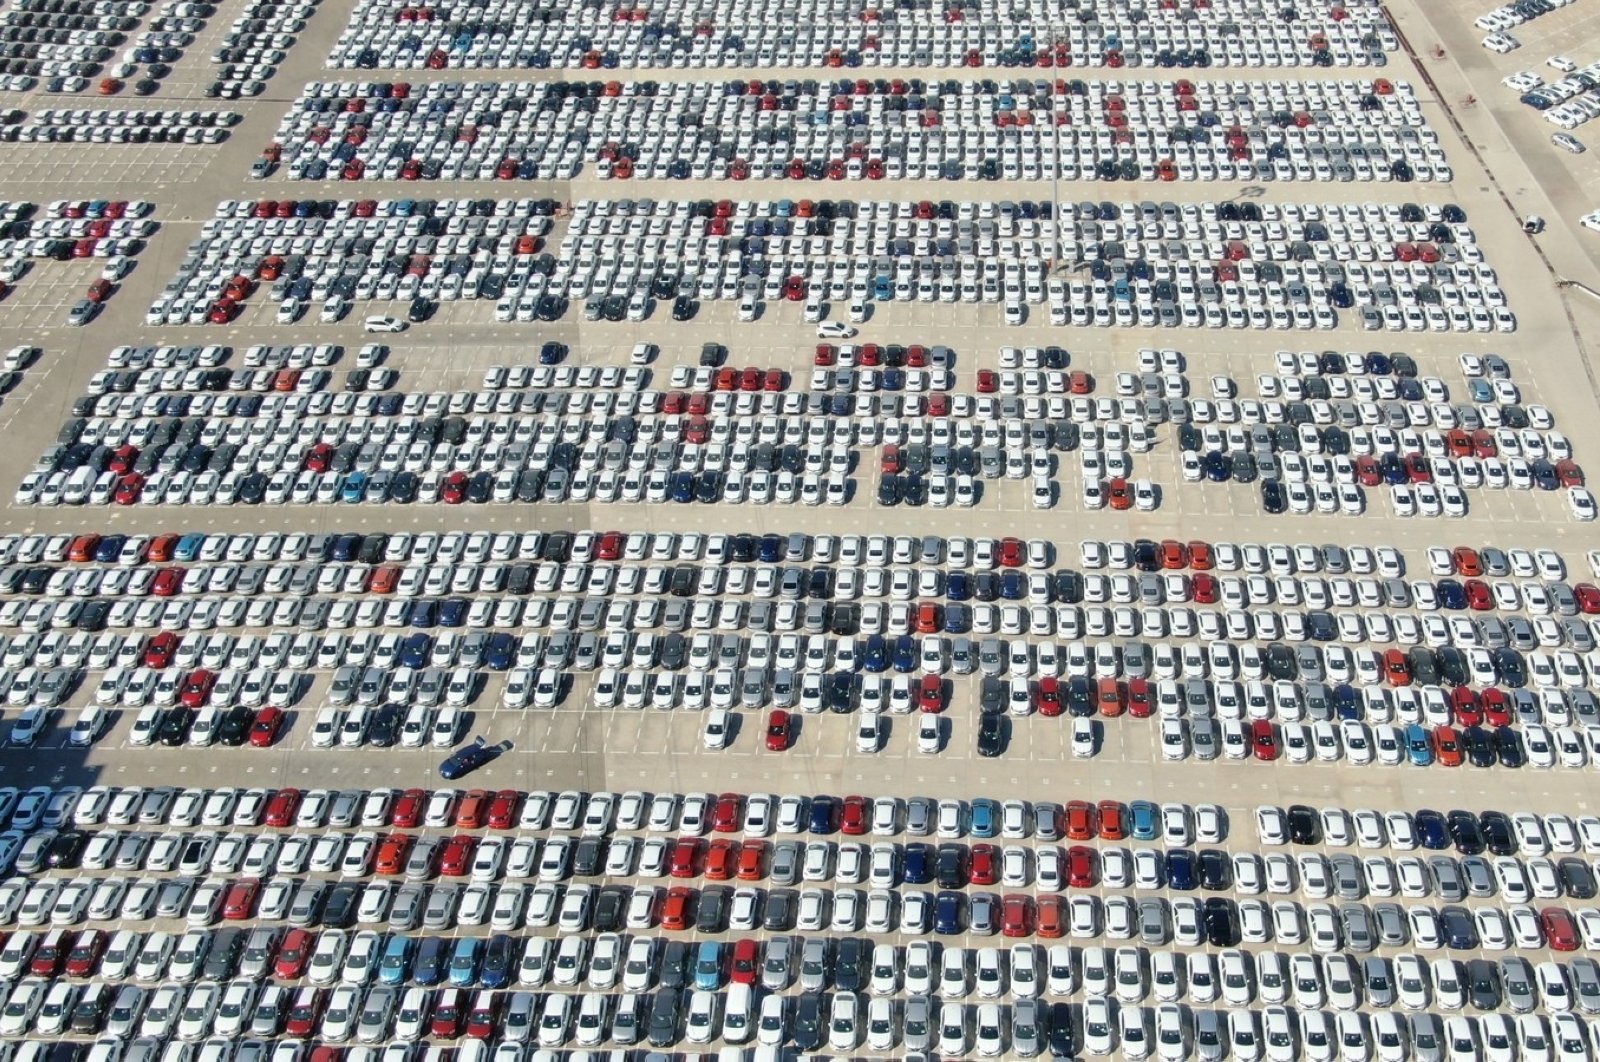 Carss parked at a plant in northwestern Bursa province, Turkey, Oct. 3, 2020. (IHA Photo)